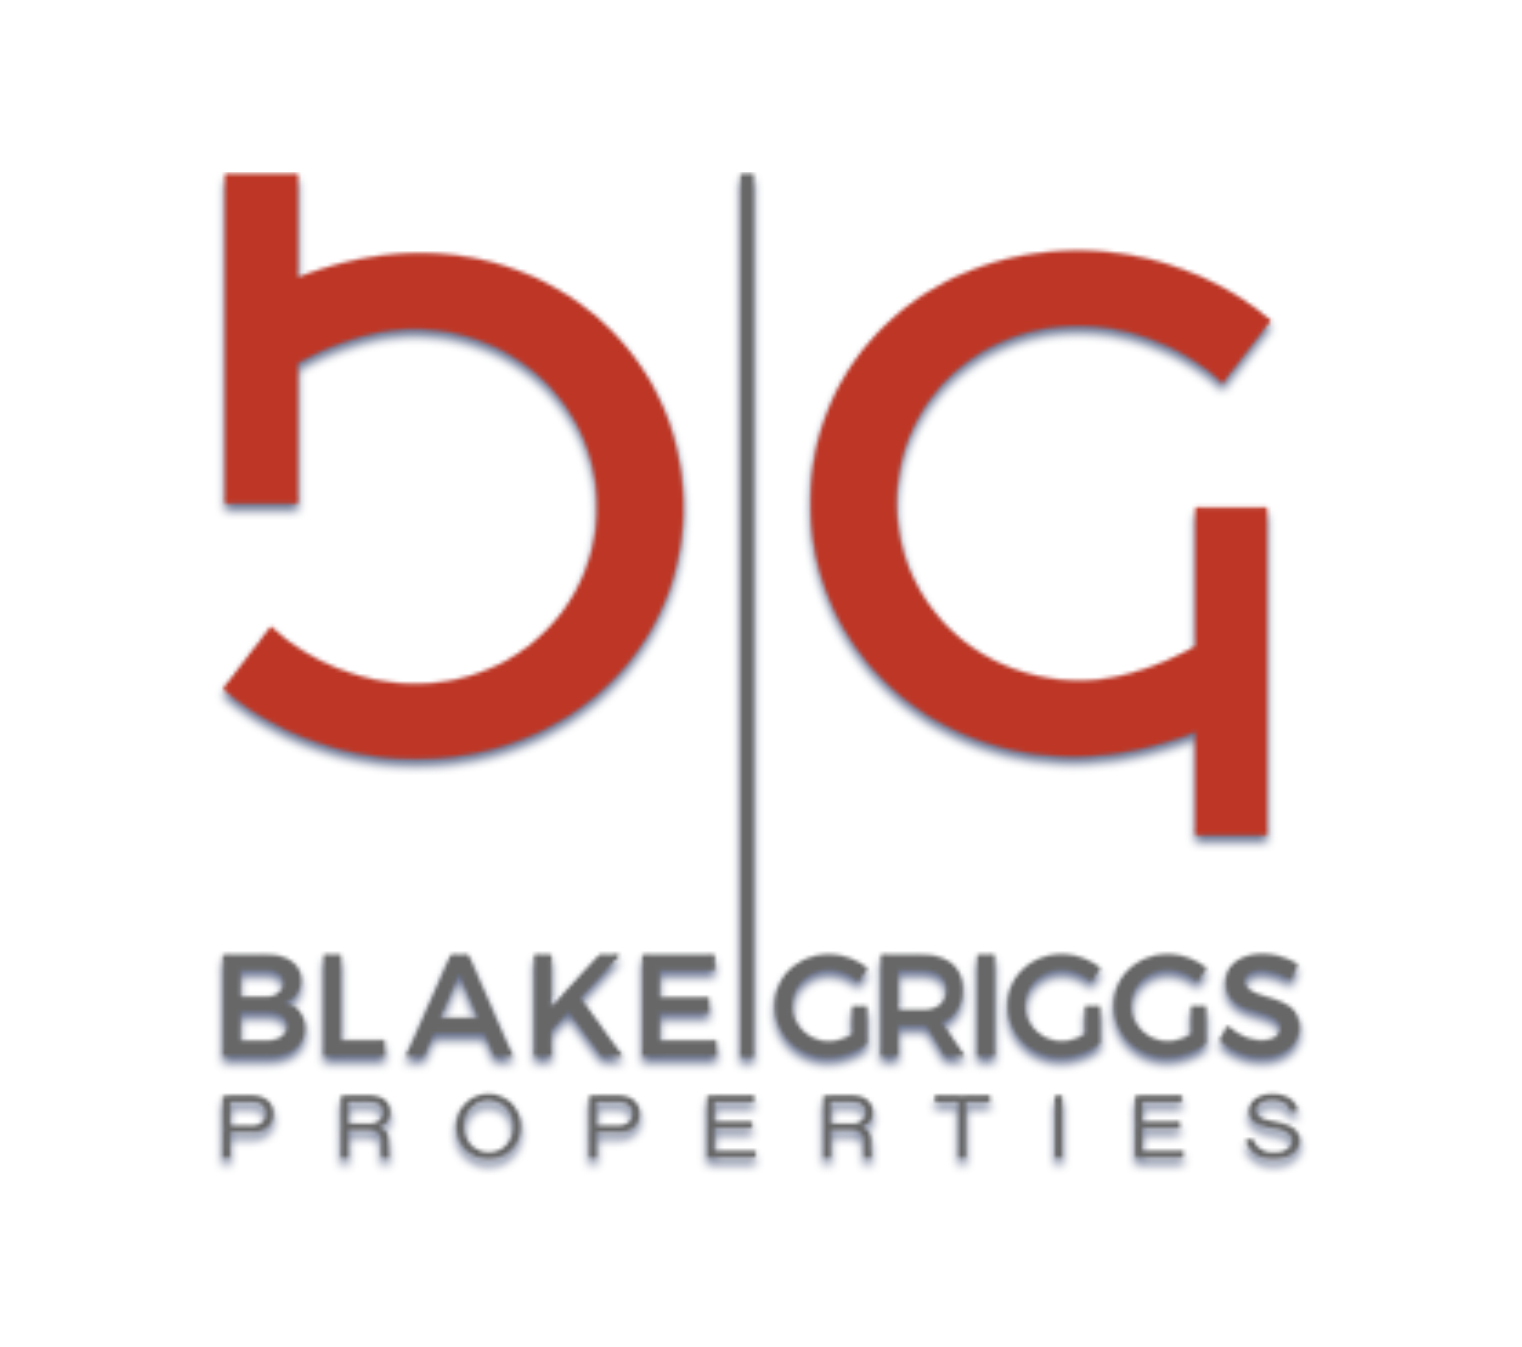 Developer/Property Owner Blake I Griggs Properties logo